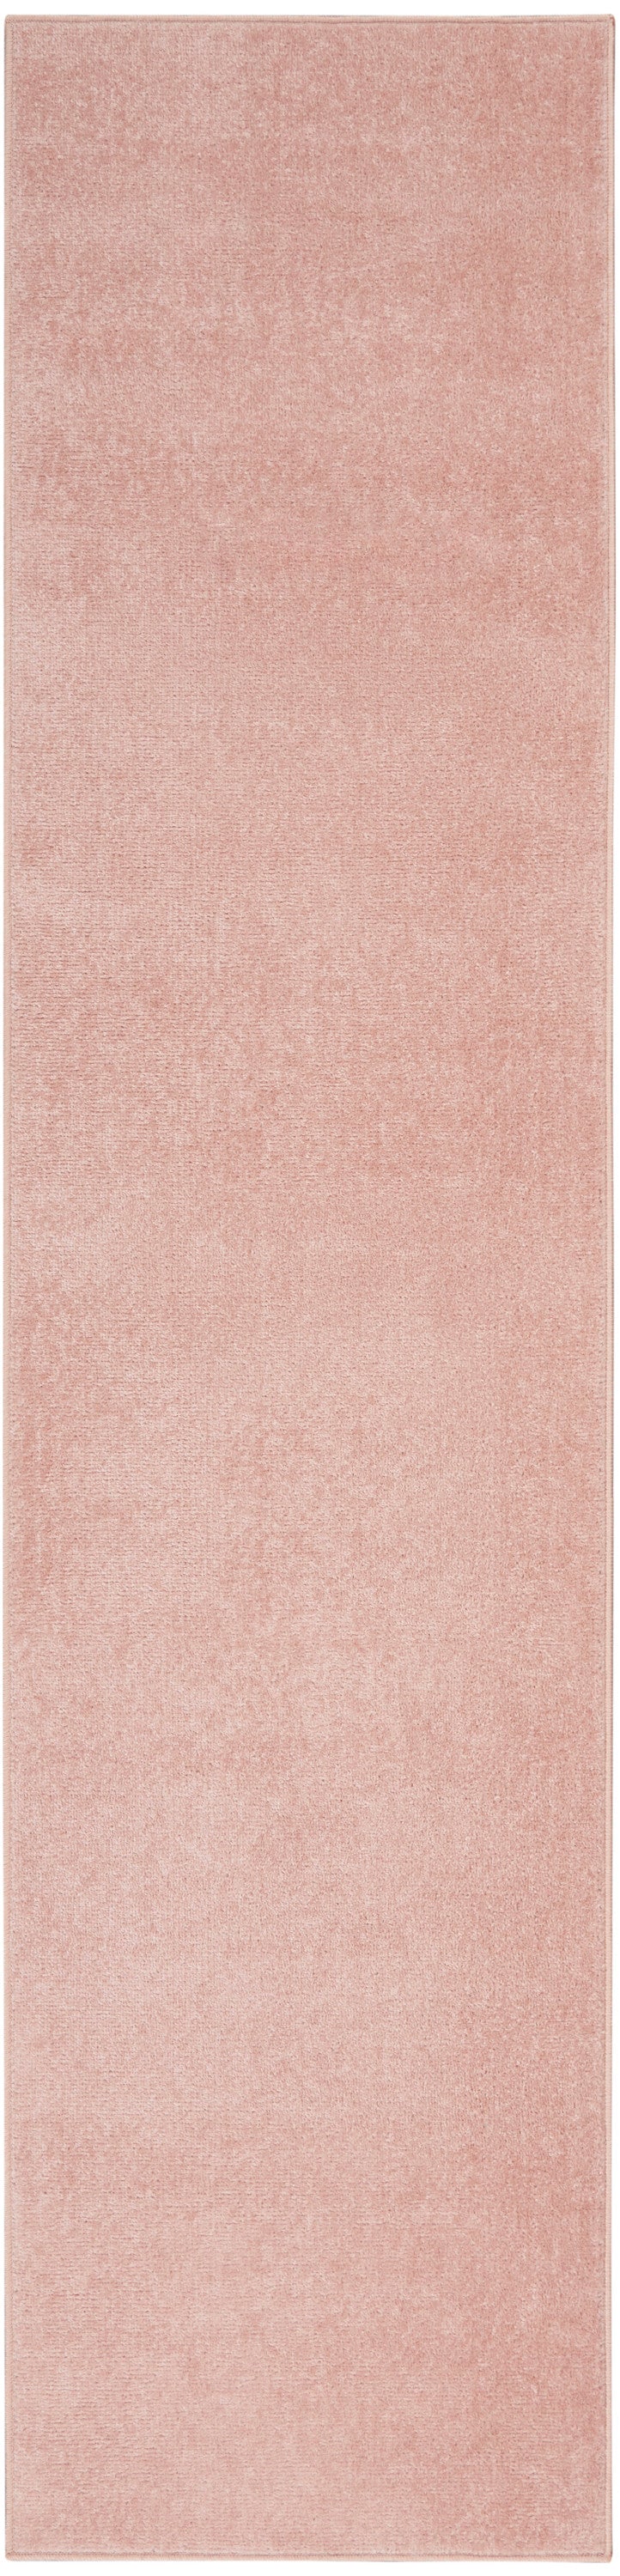 media image for nourison essentials pink rug by nourison 99446824776 redo 3 238